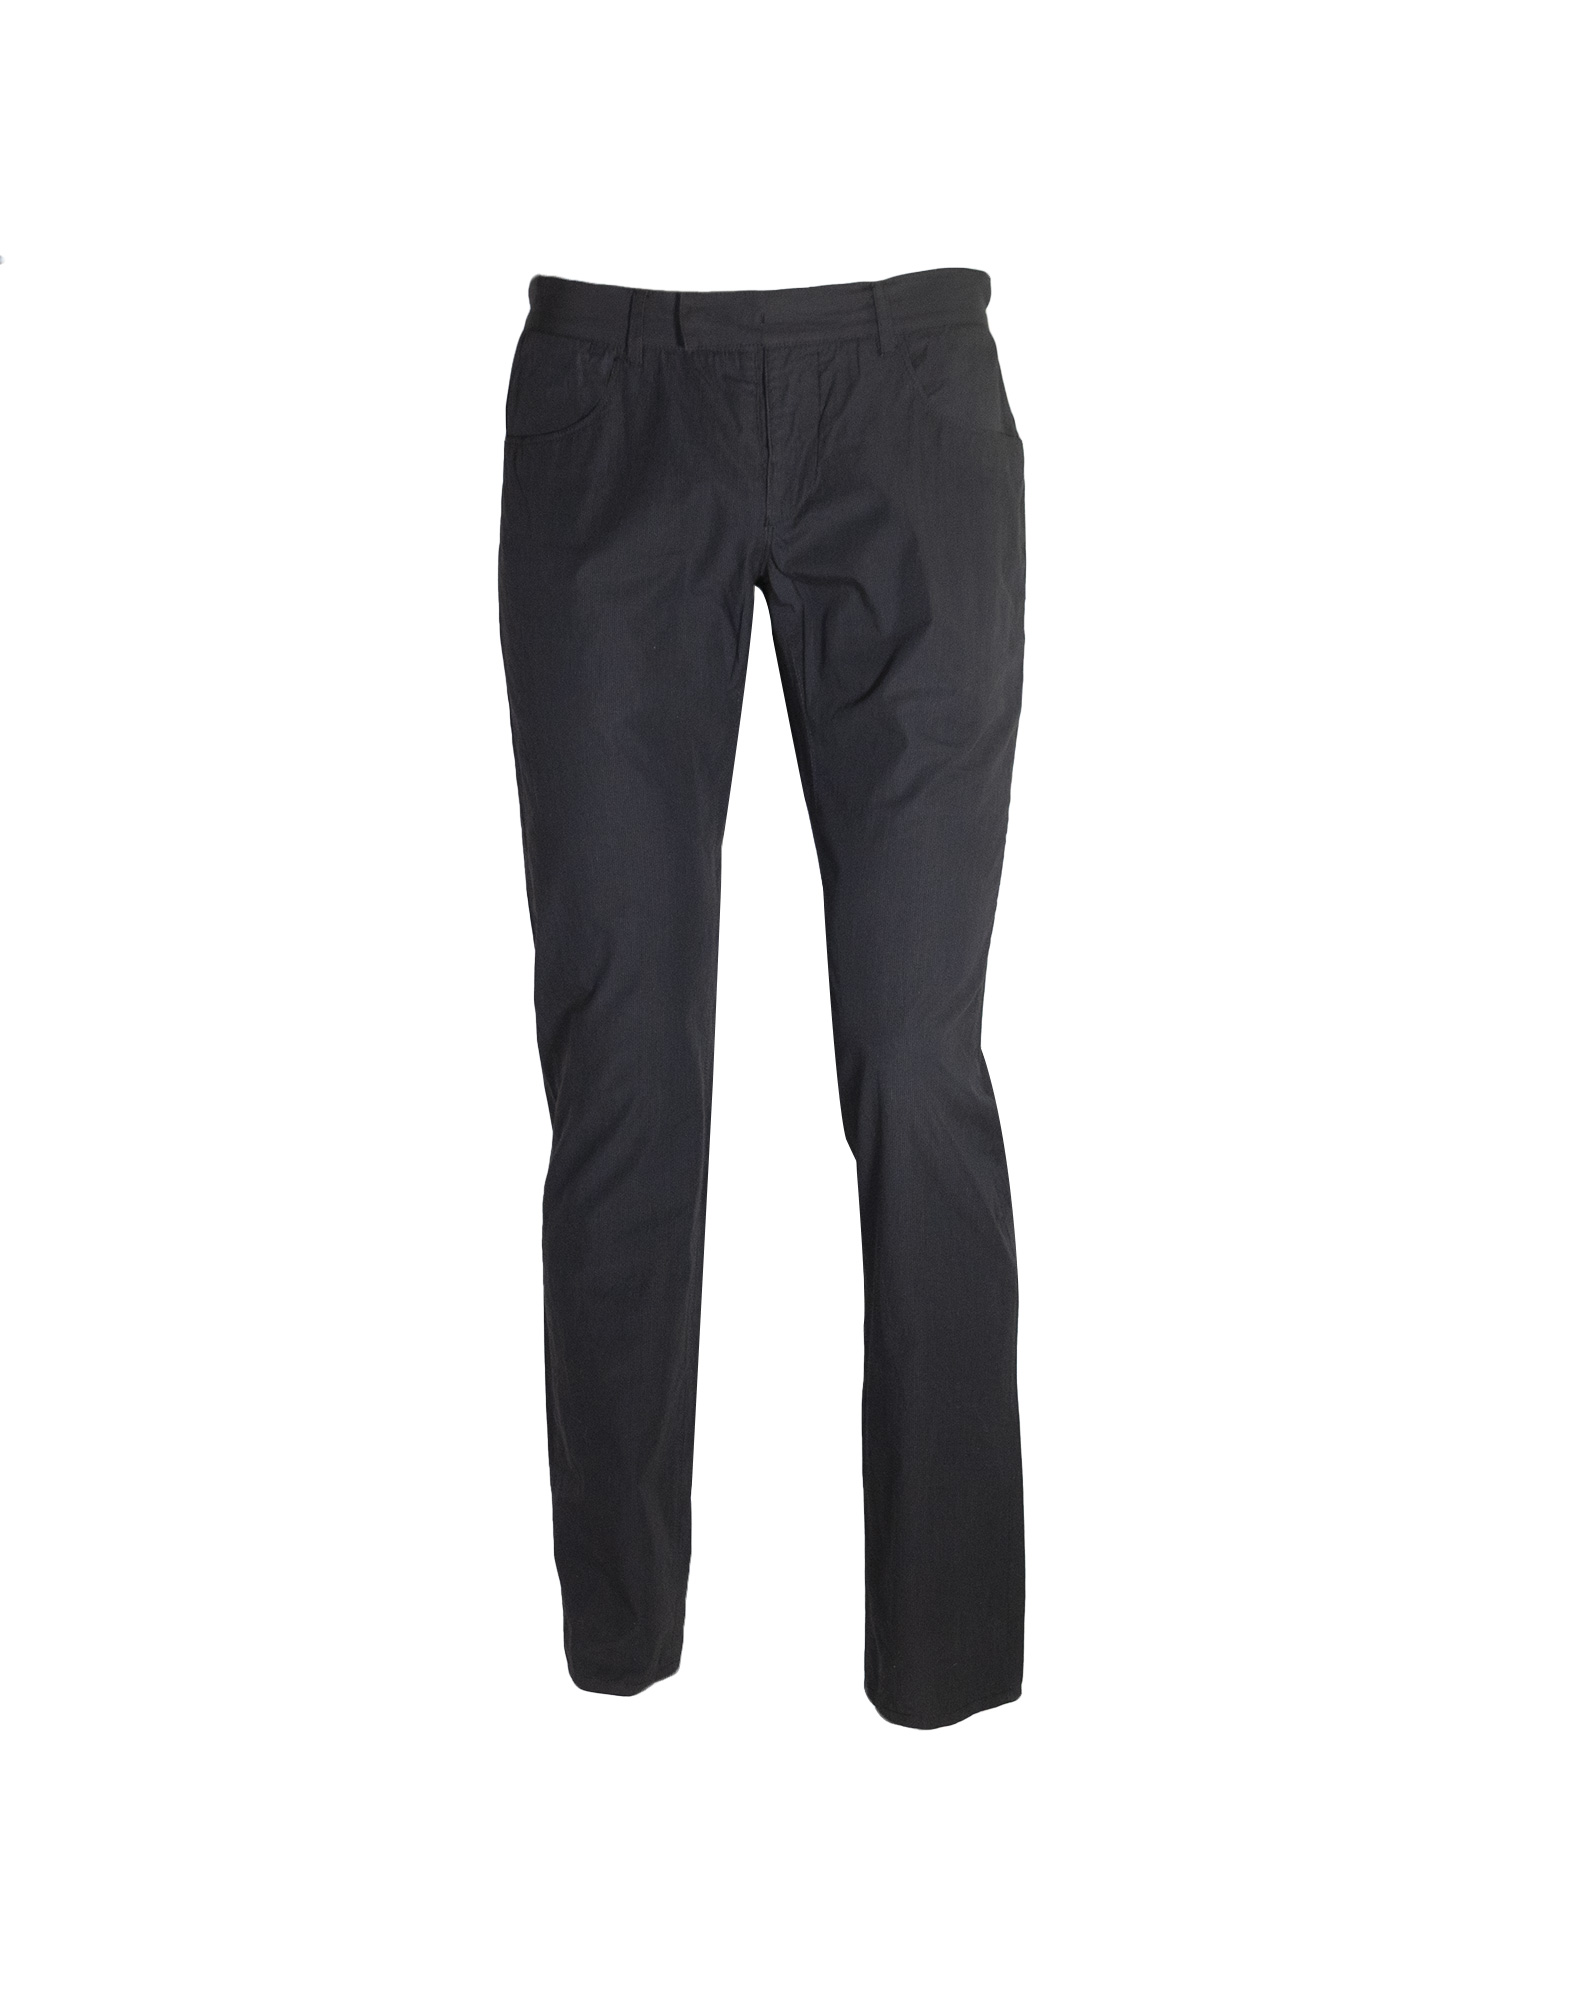 Prada - Grey cotton trousers